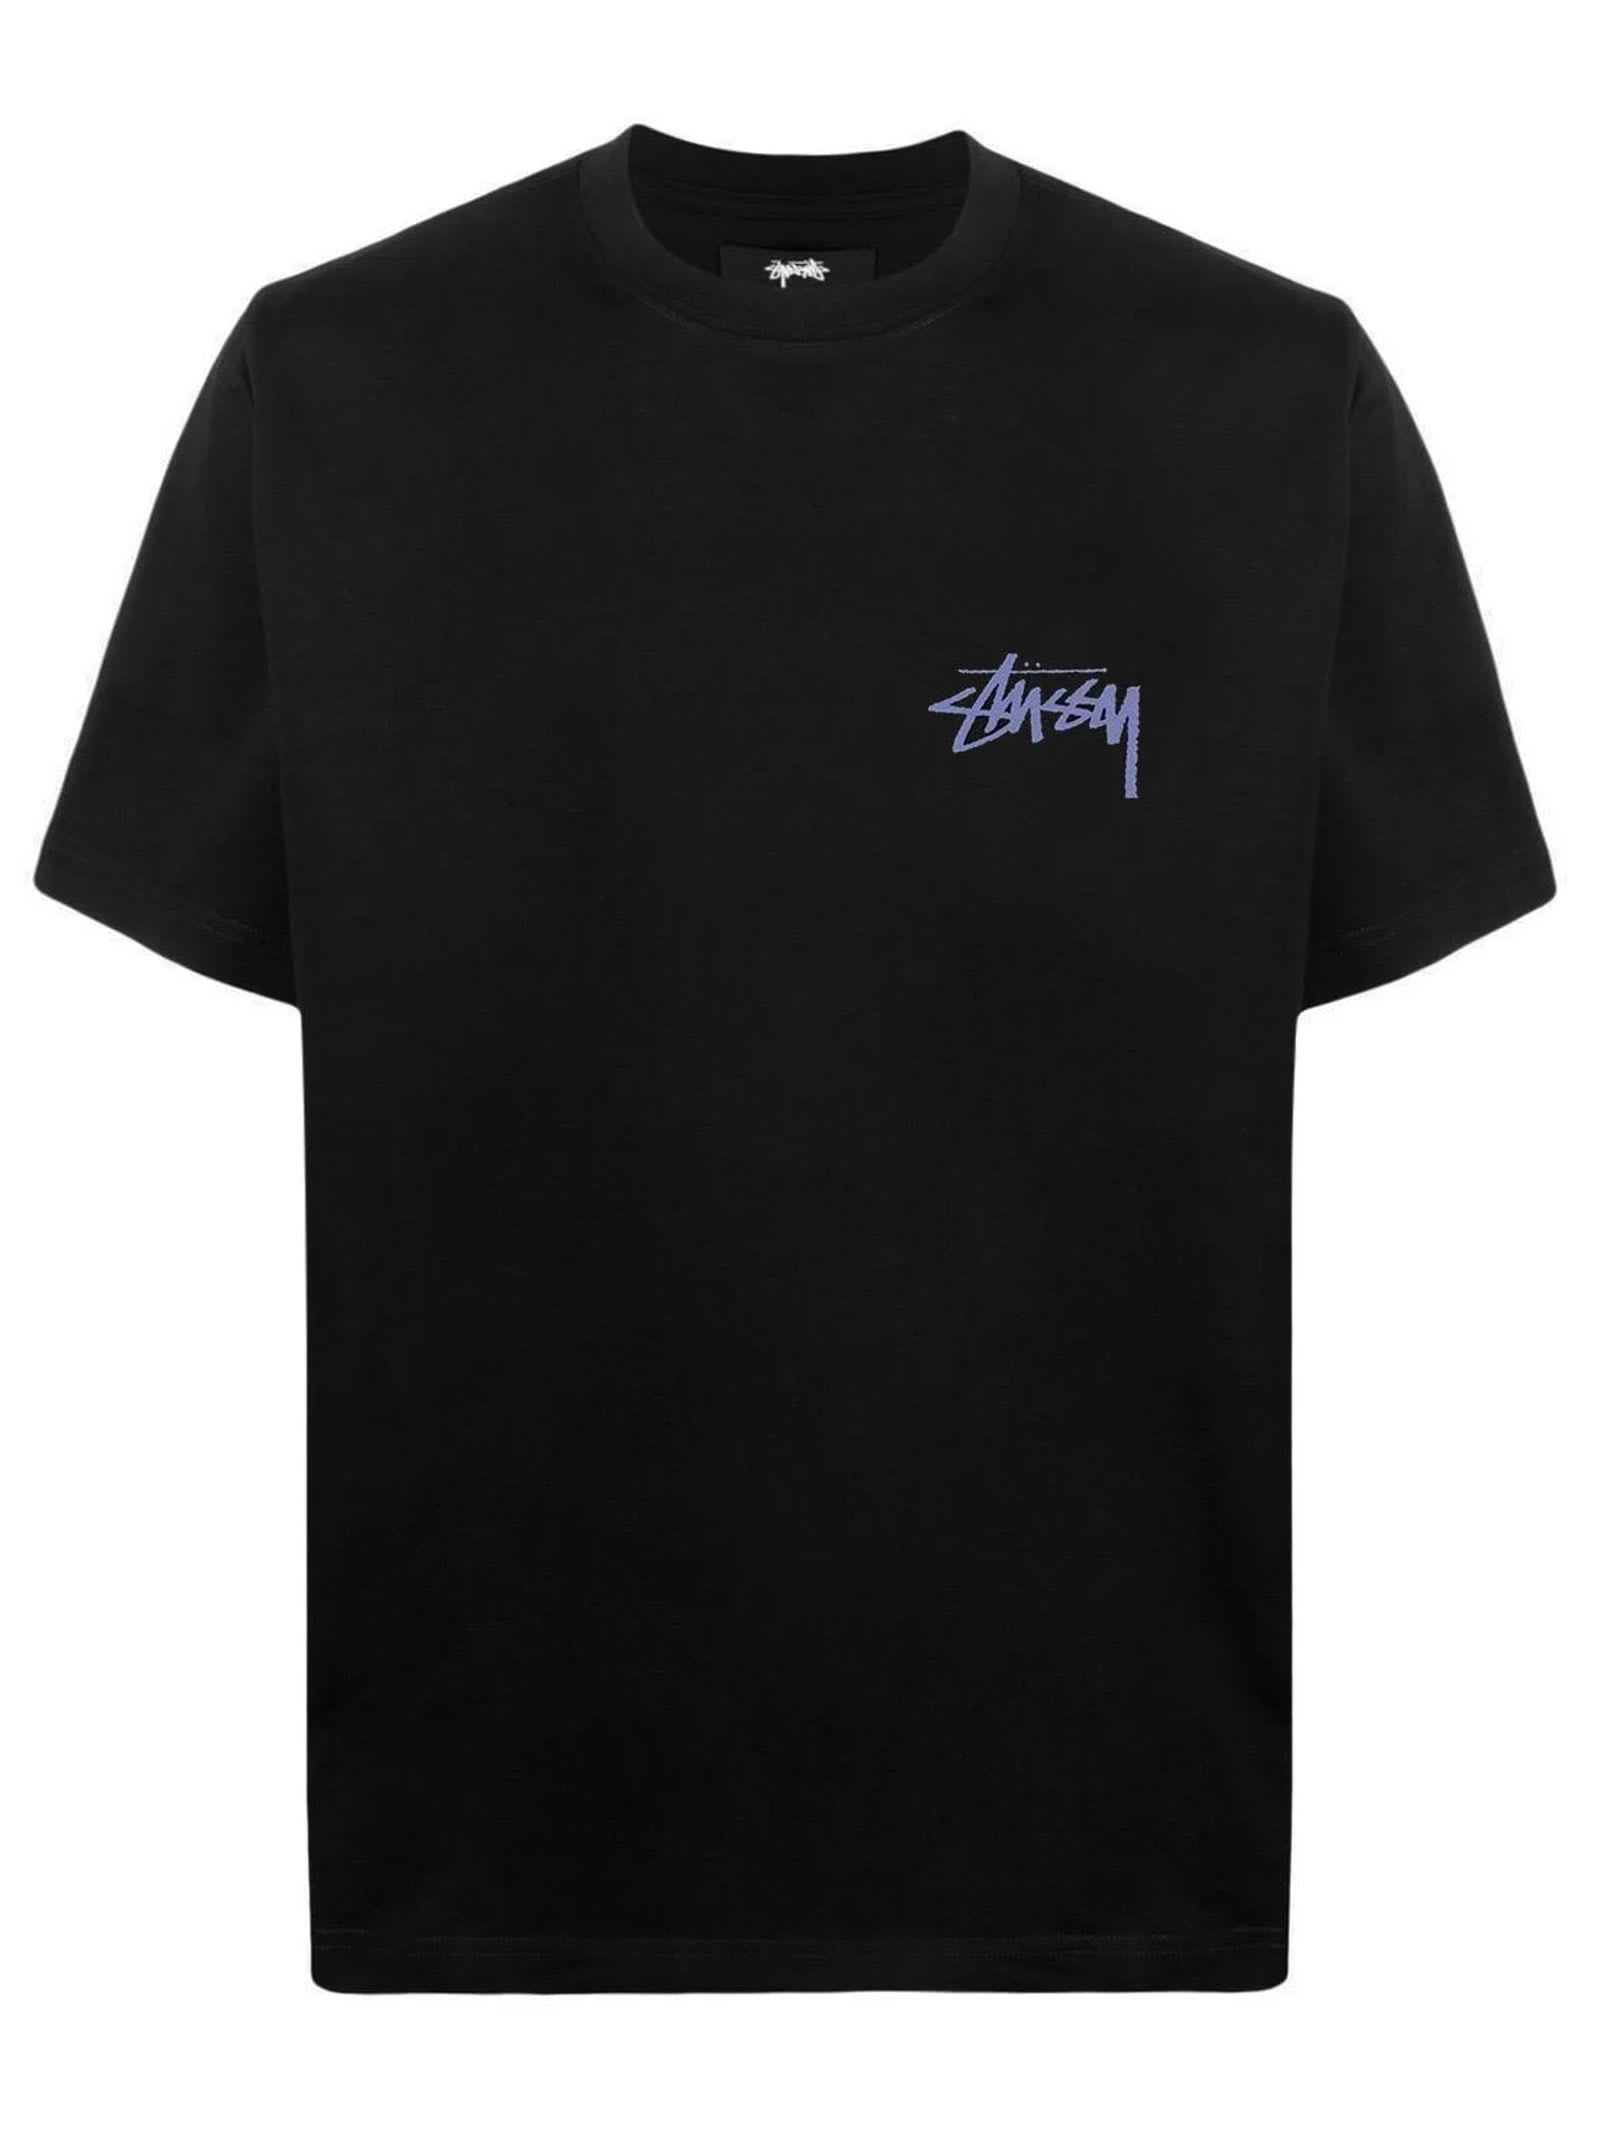 Stussy Black Cotton T-shirt